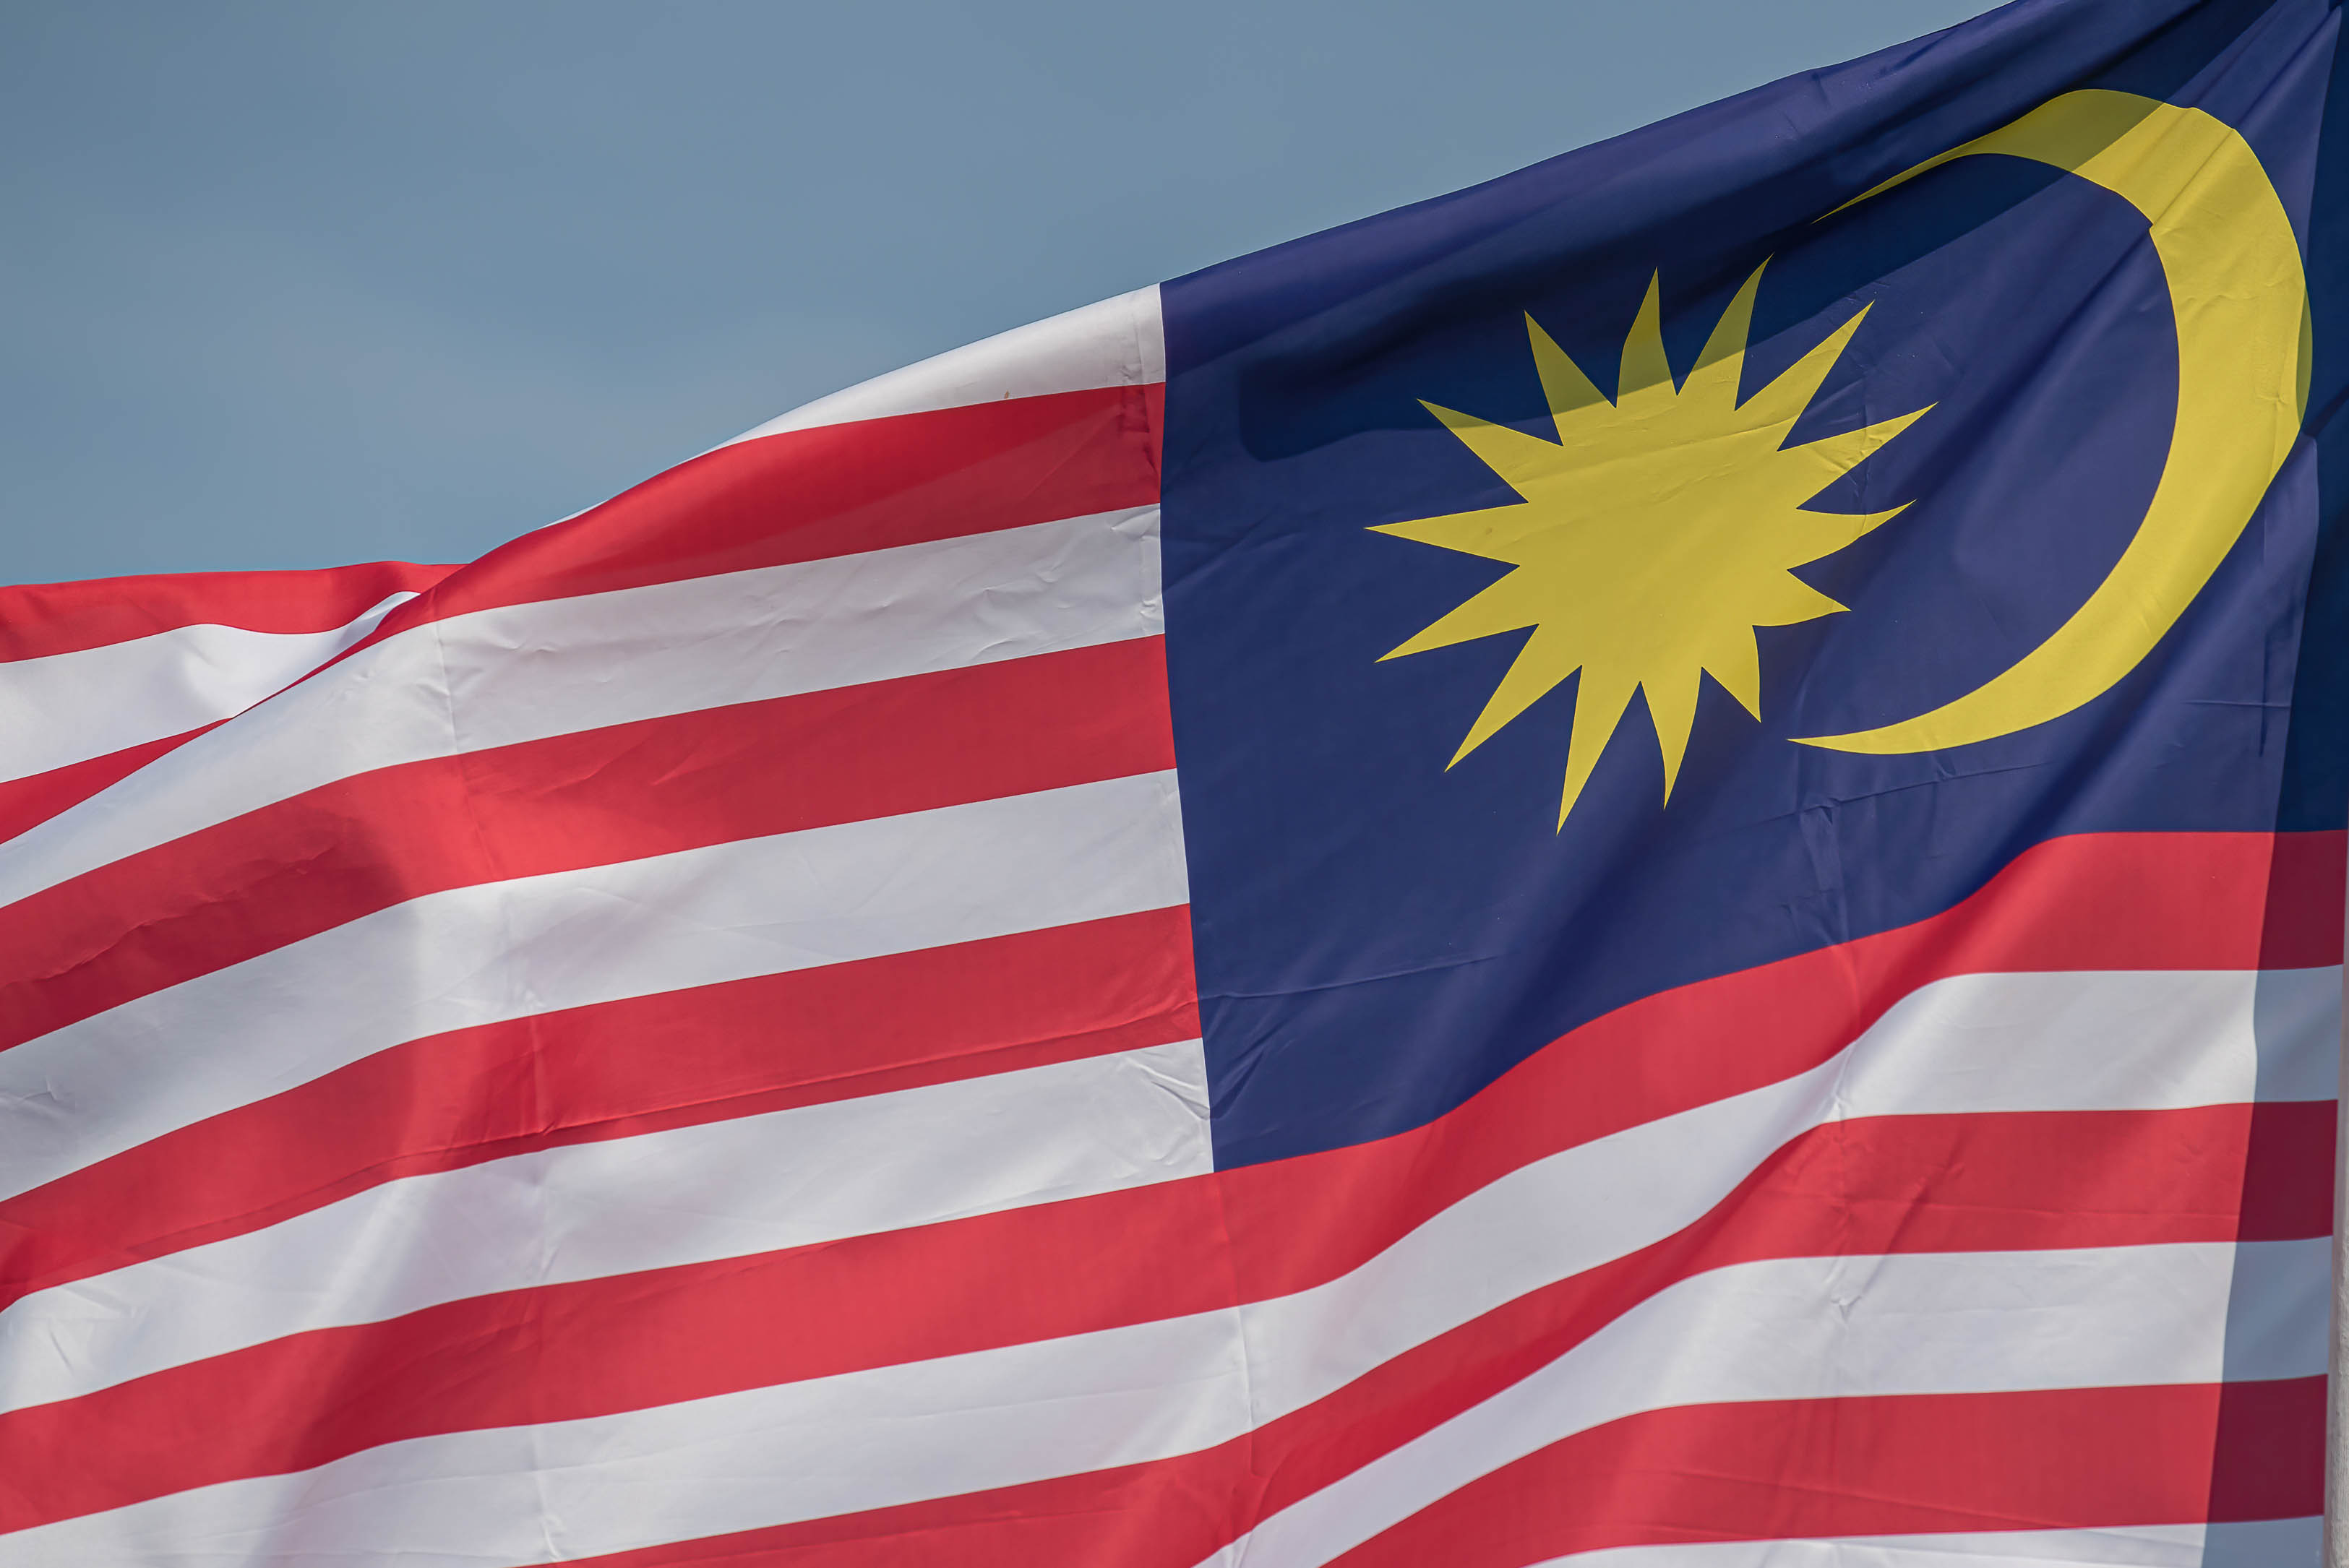 Will Malaysia become a fully Islamic society?